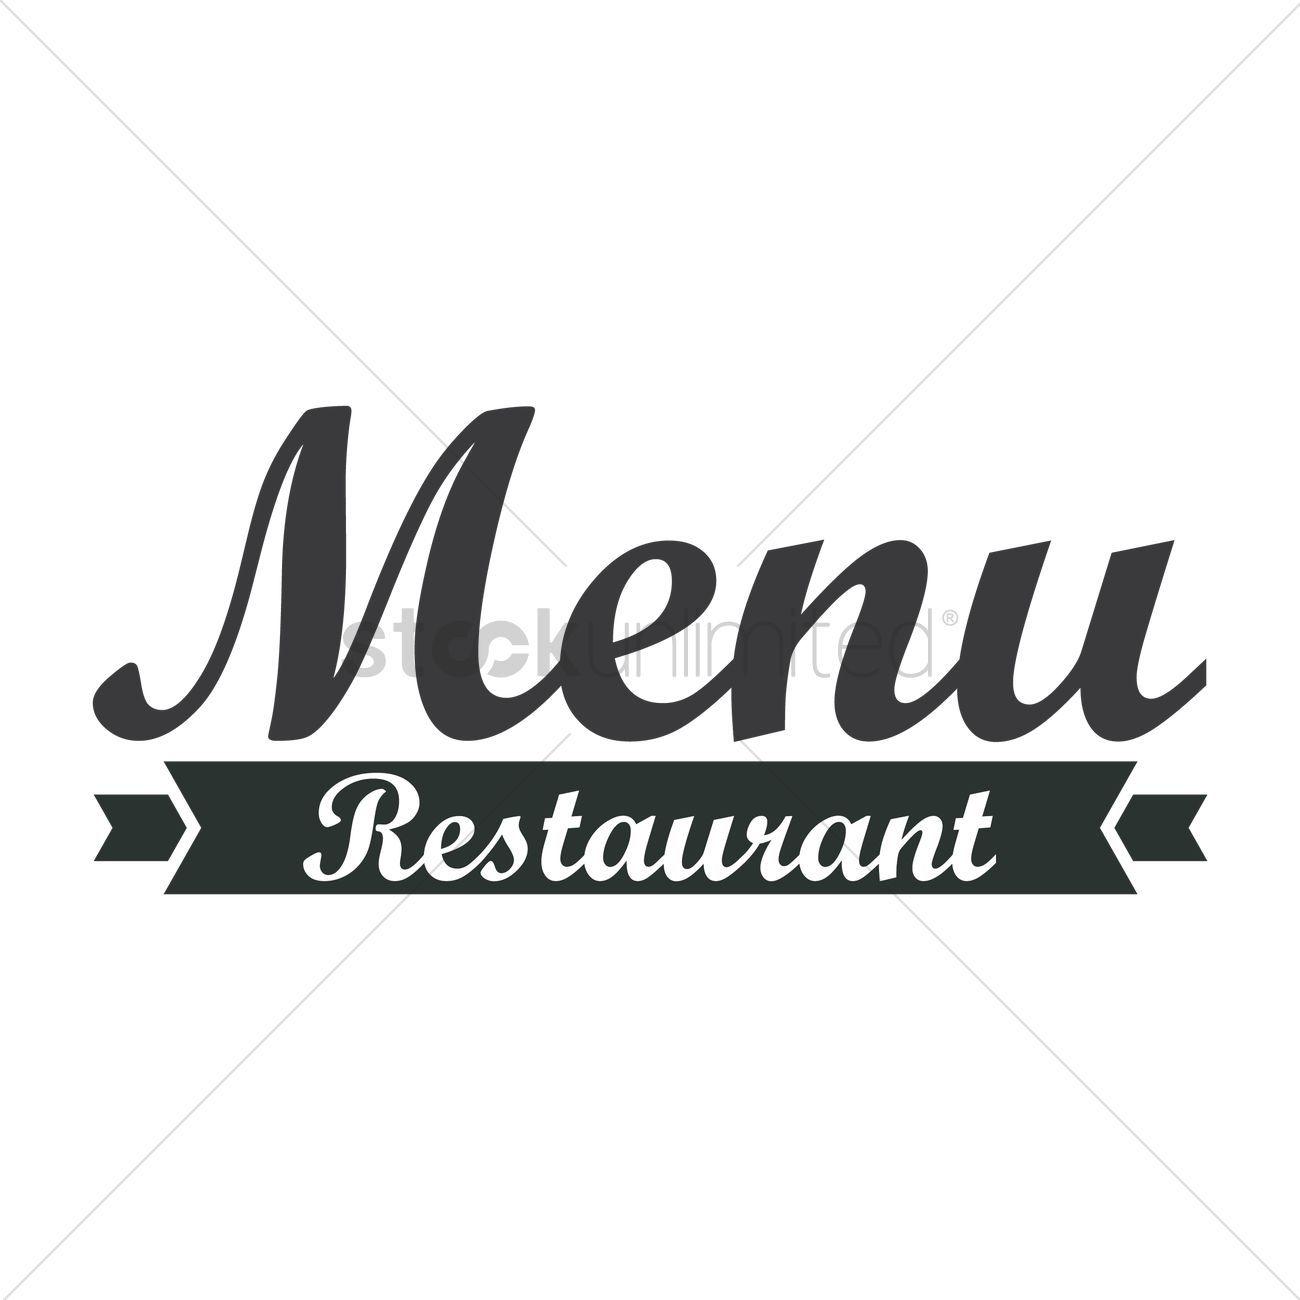 Menu Logo - Restaurant menu logo icon Vector Image - 1710150 | StockUnlimited